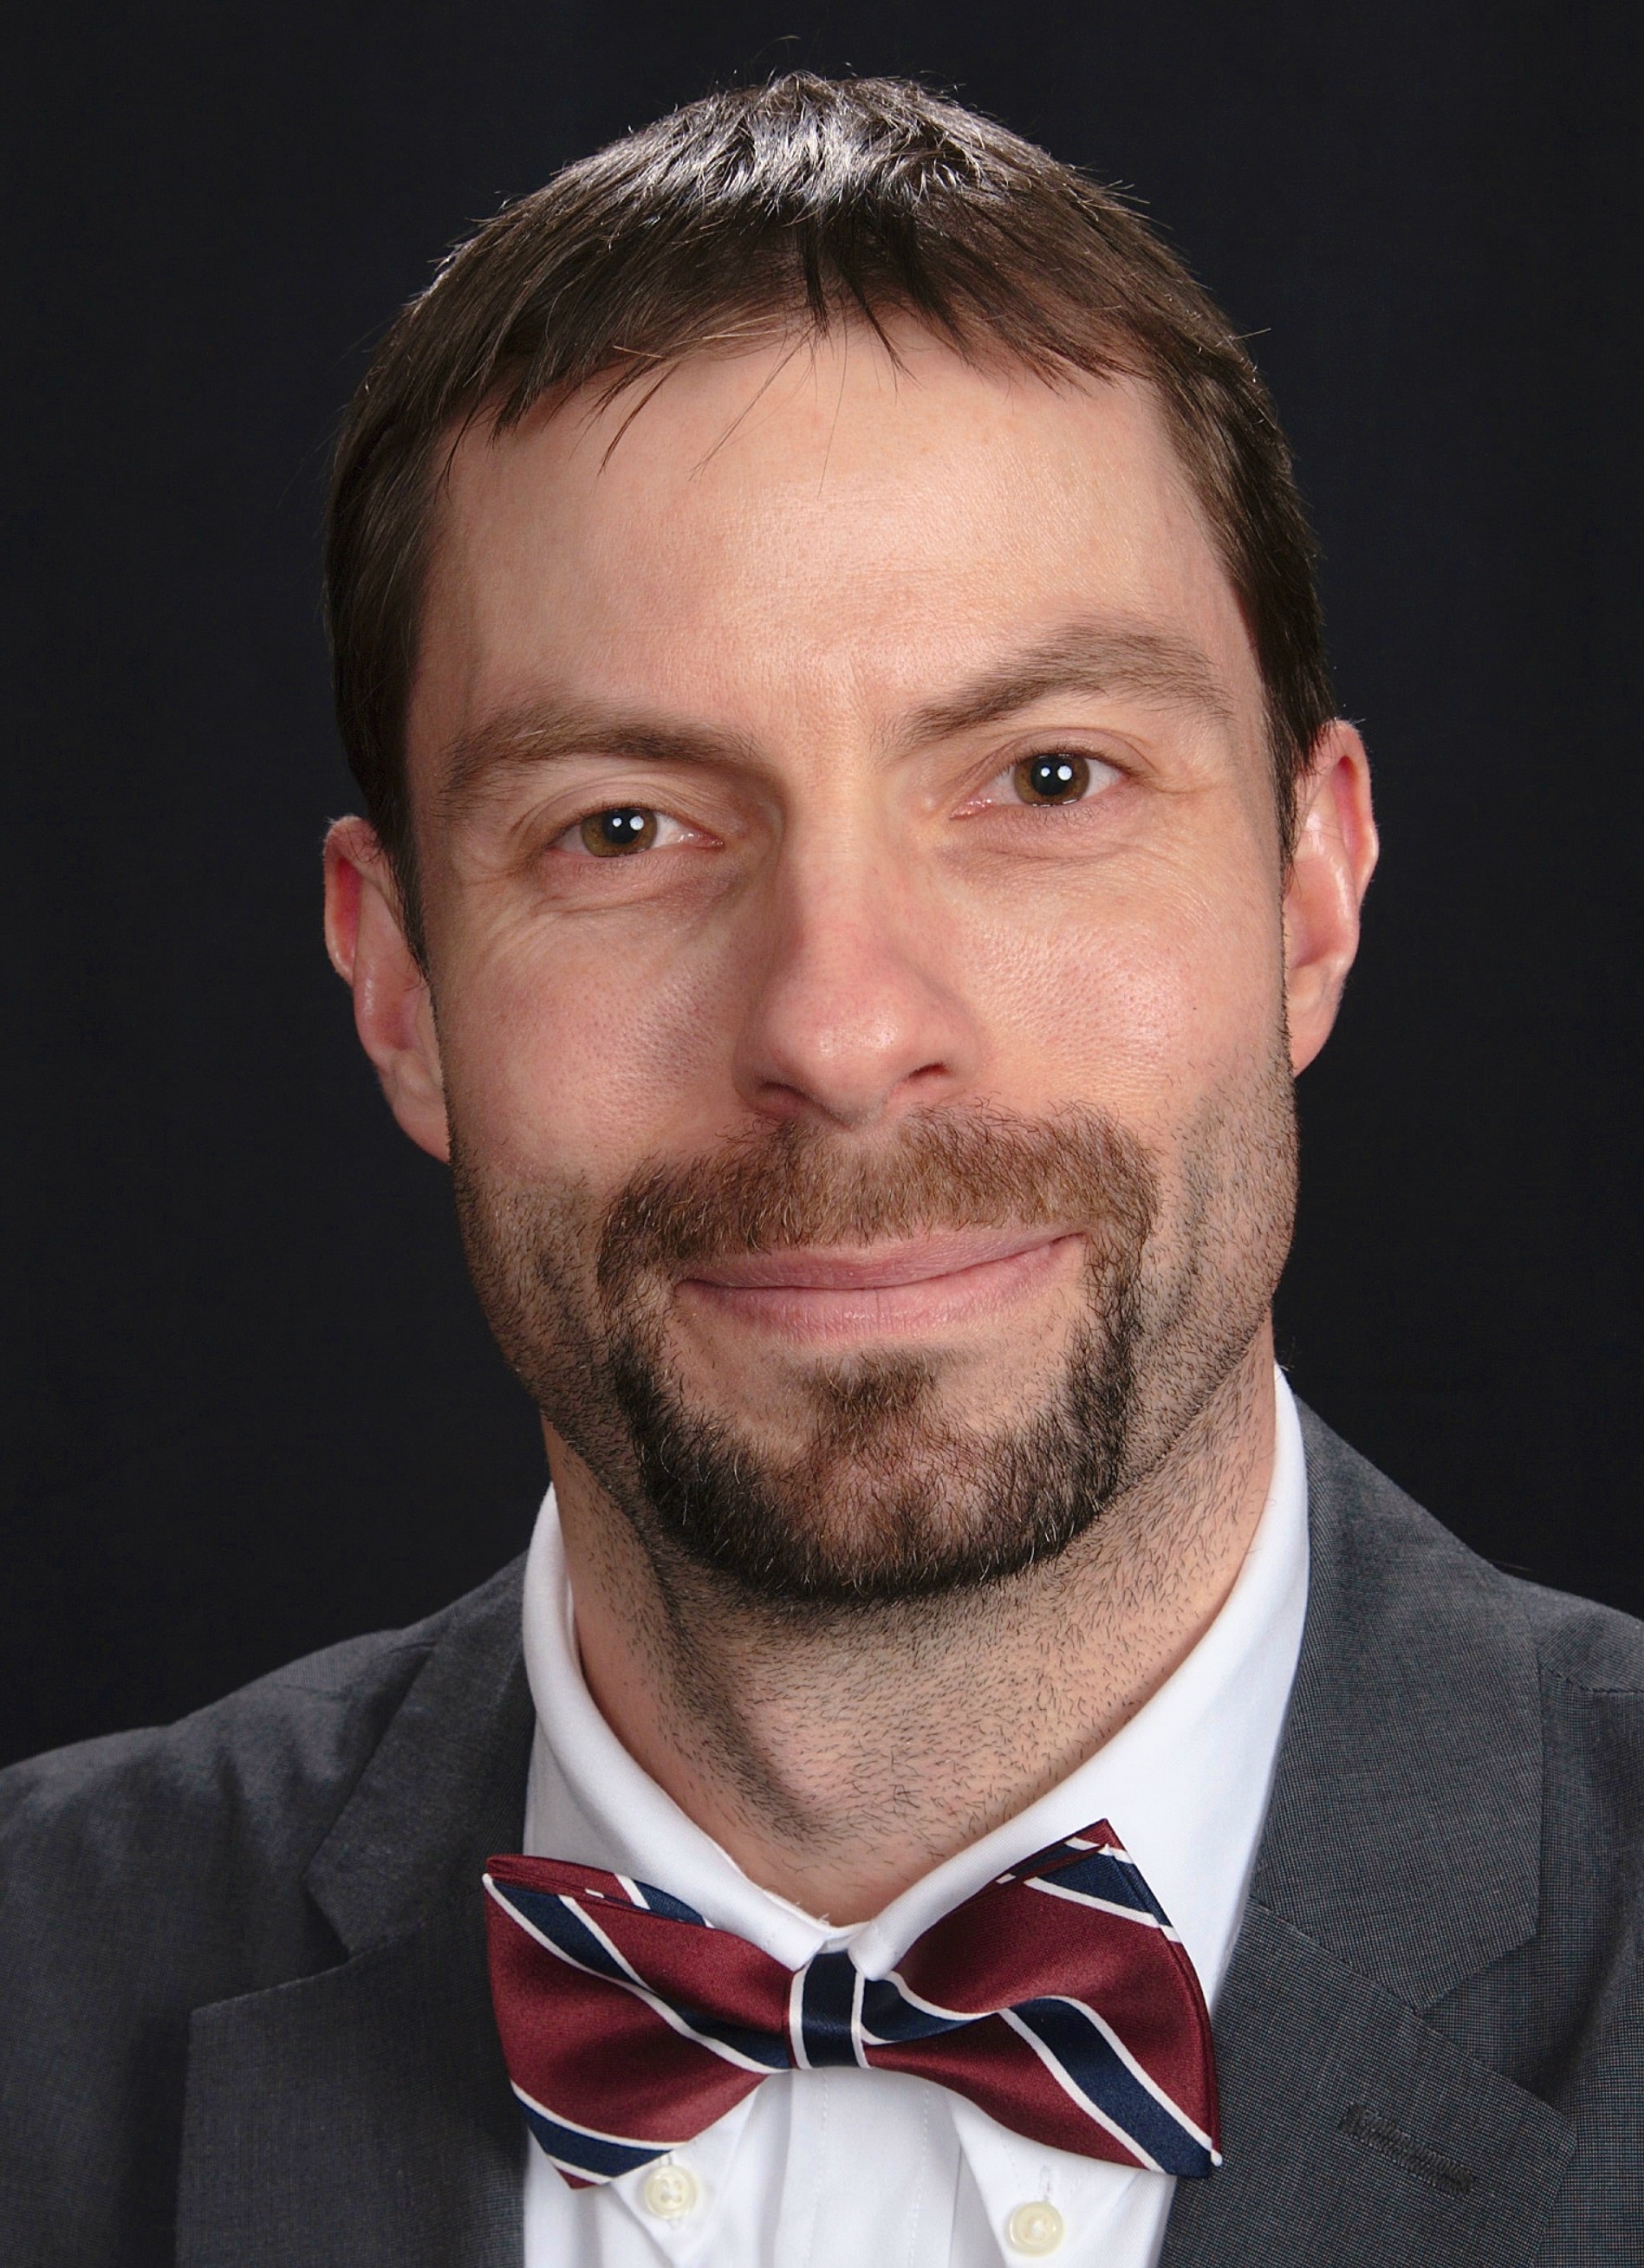 Oliver Grundmann, PhD, MS, MEd